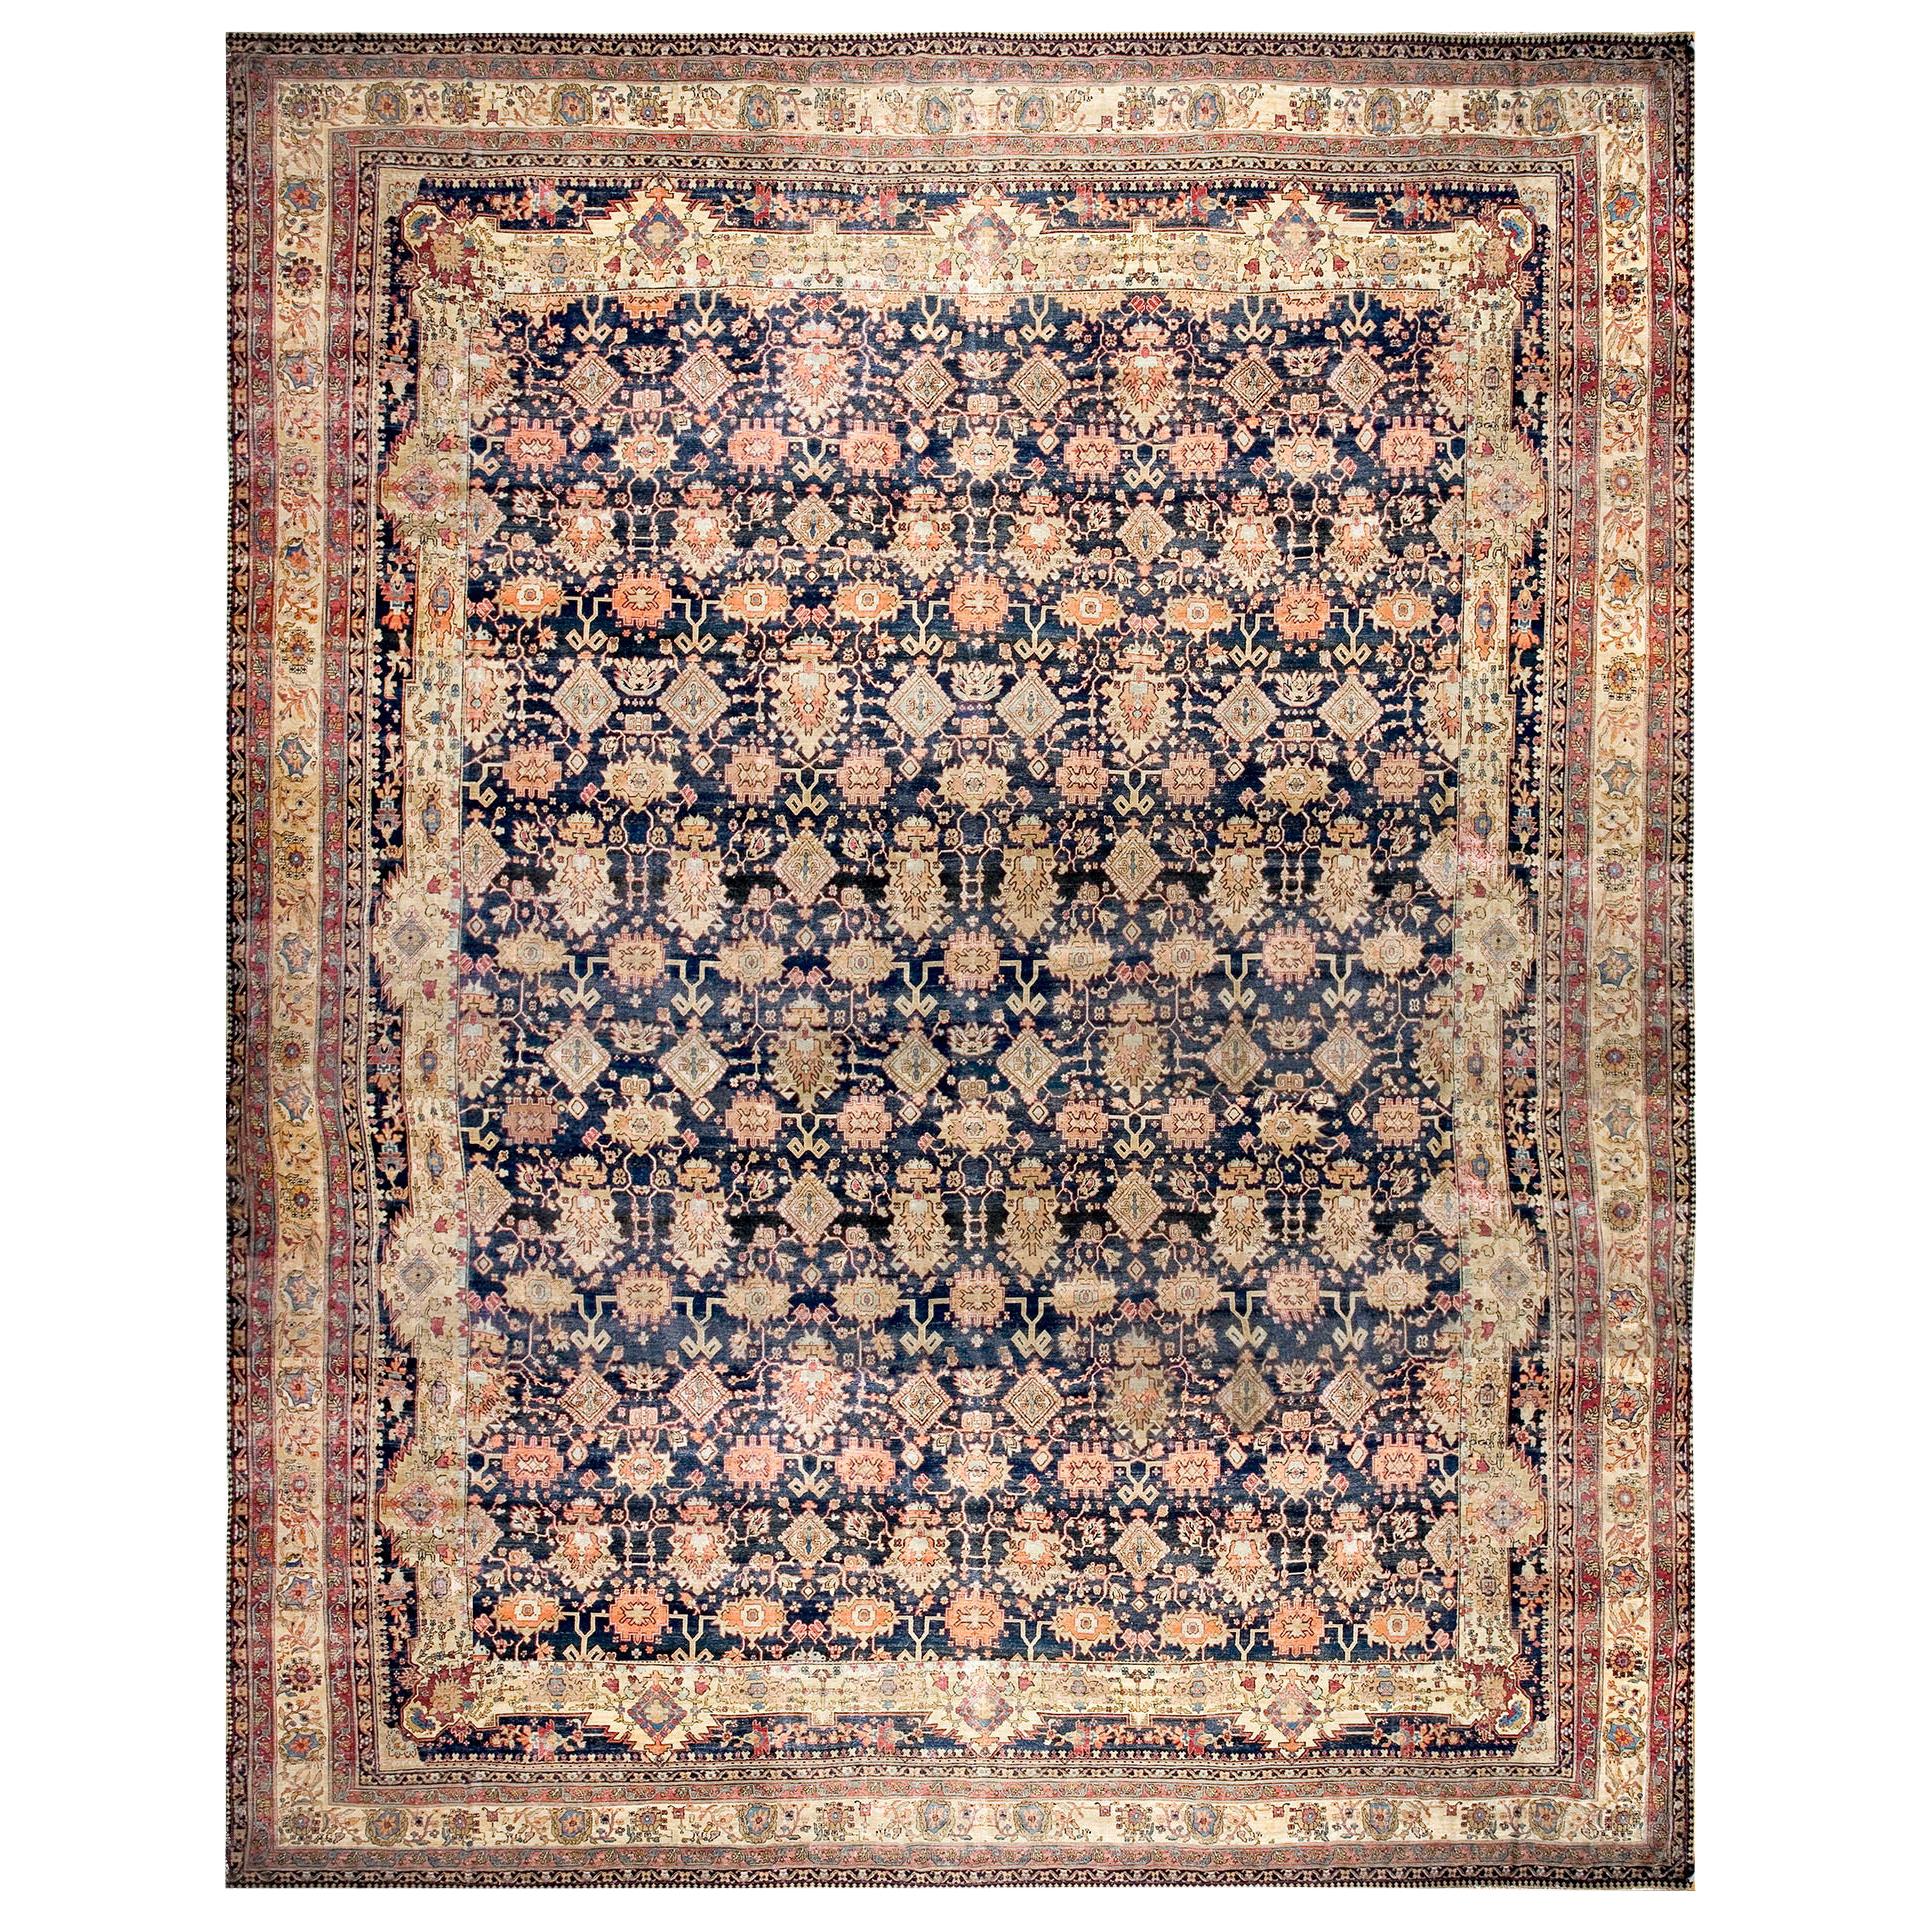 19th Century Persian Kerman Lavar Carpet ( 16'6" x 22'6" - 503 x 685 )